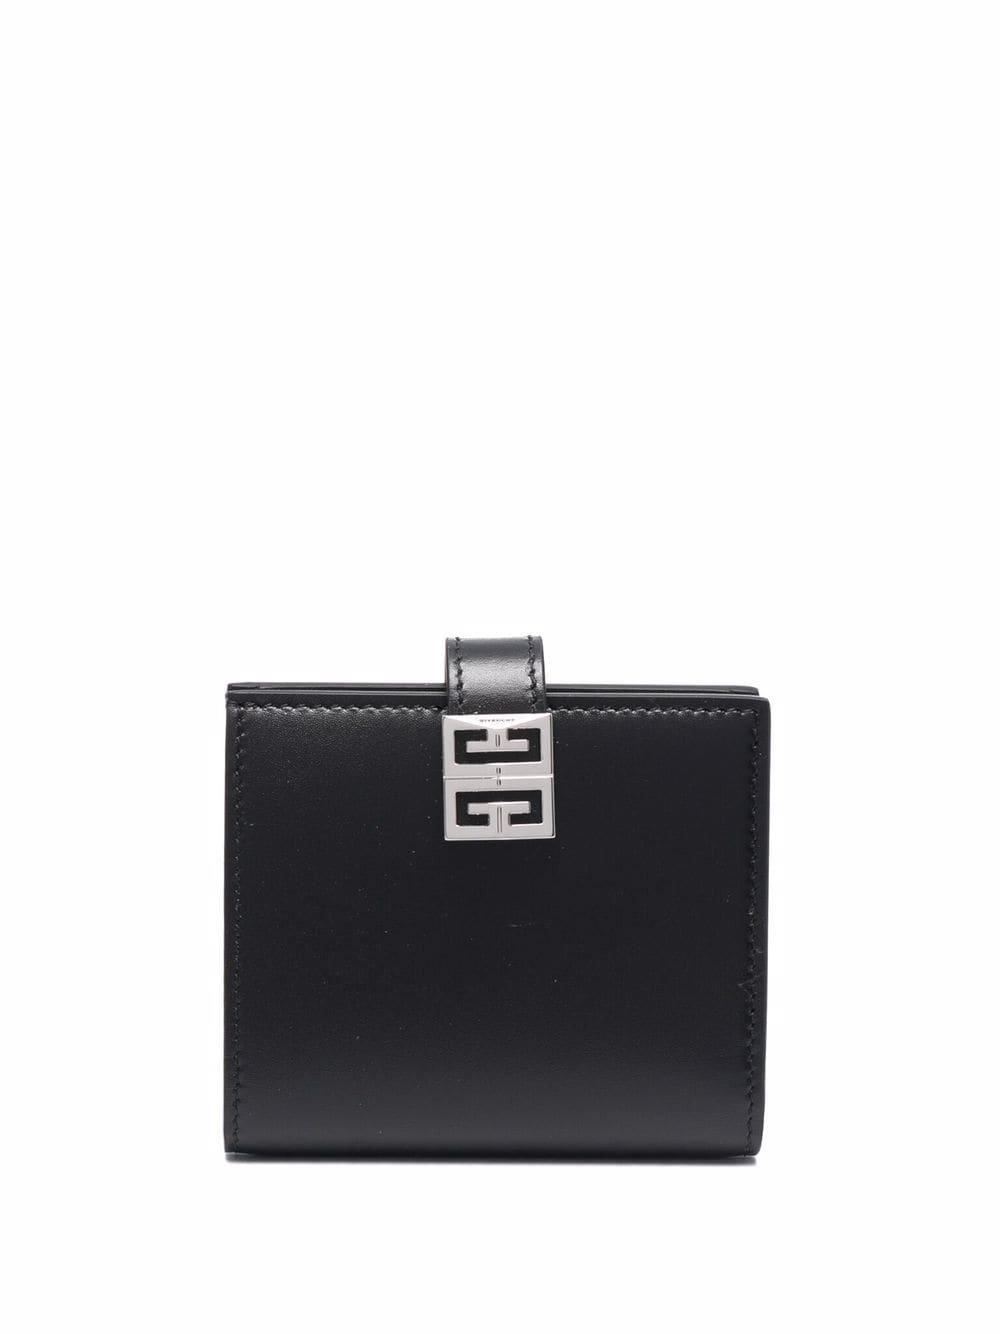 Black leather 4G-motif leather wallet